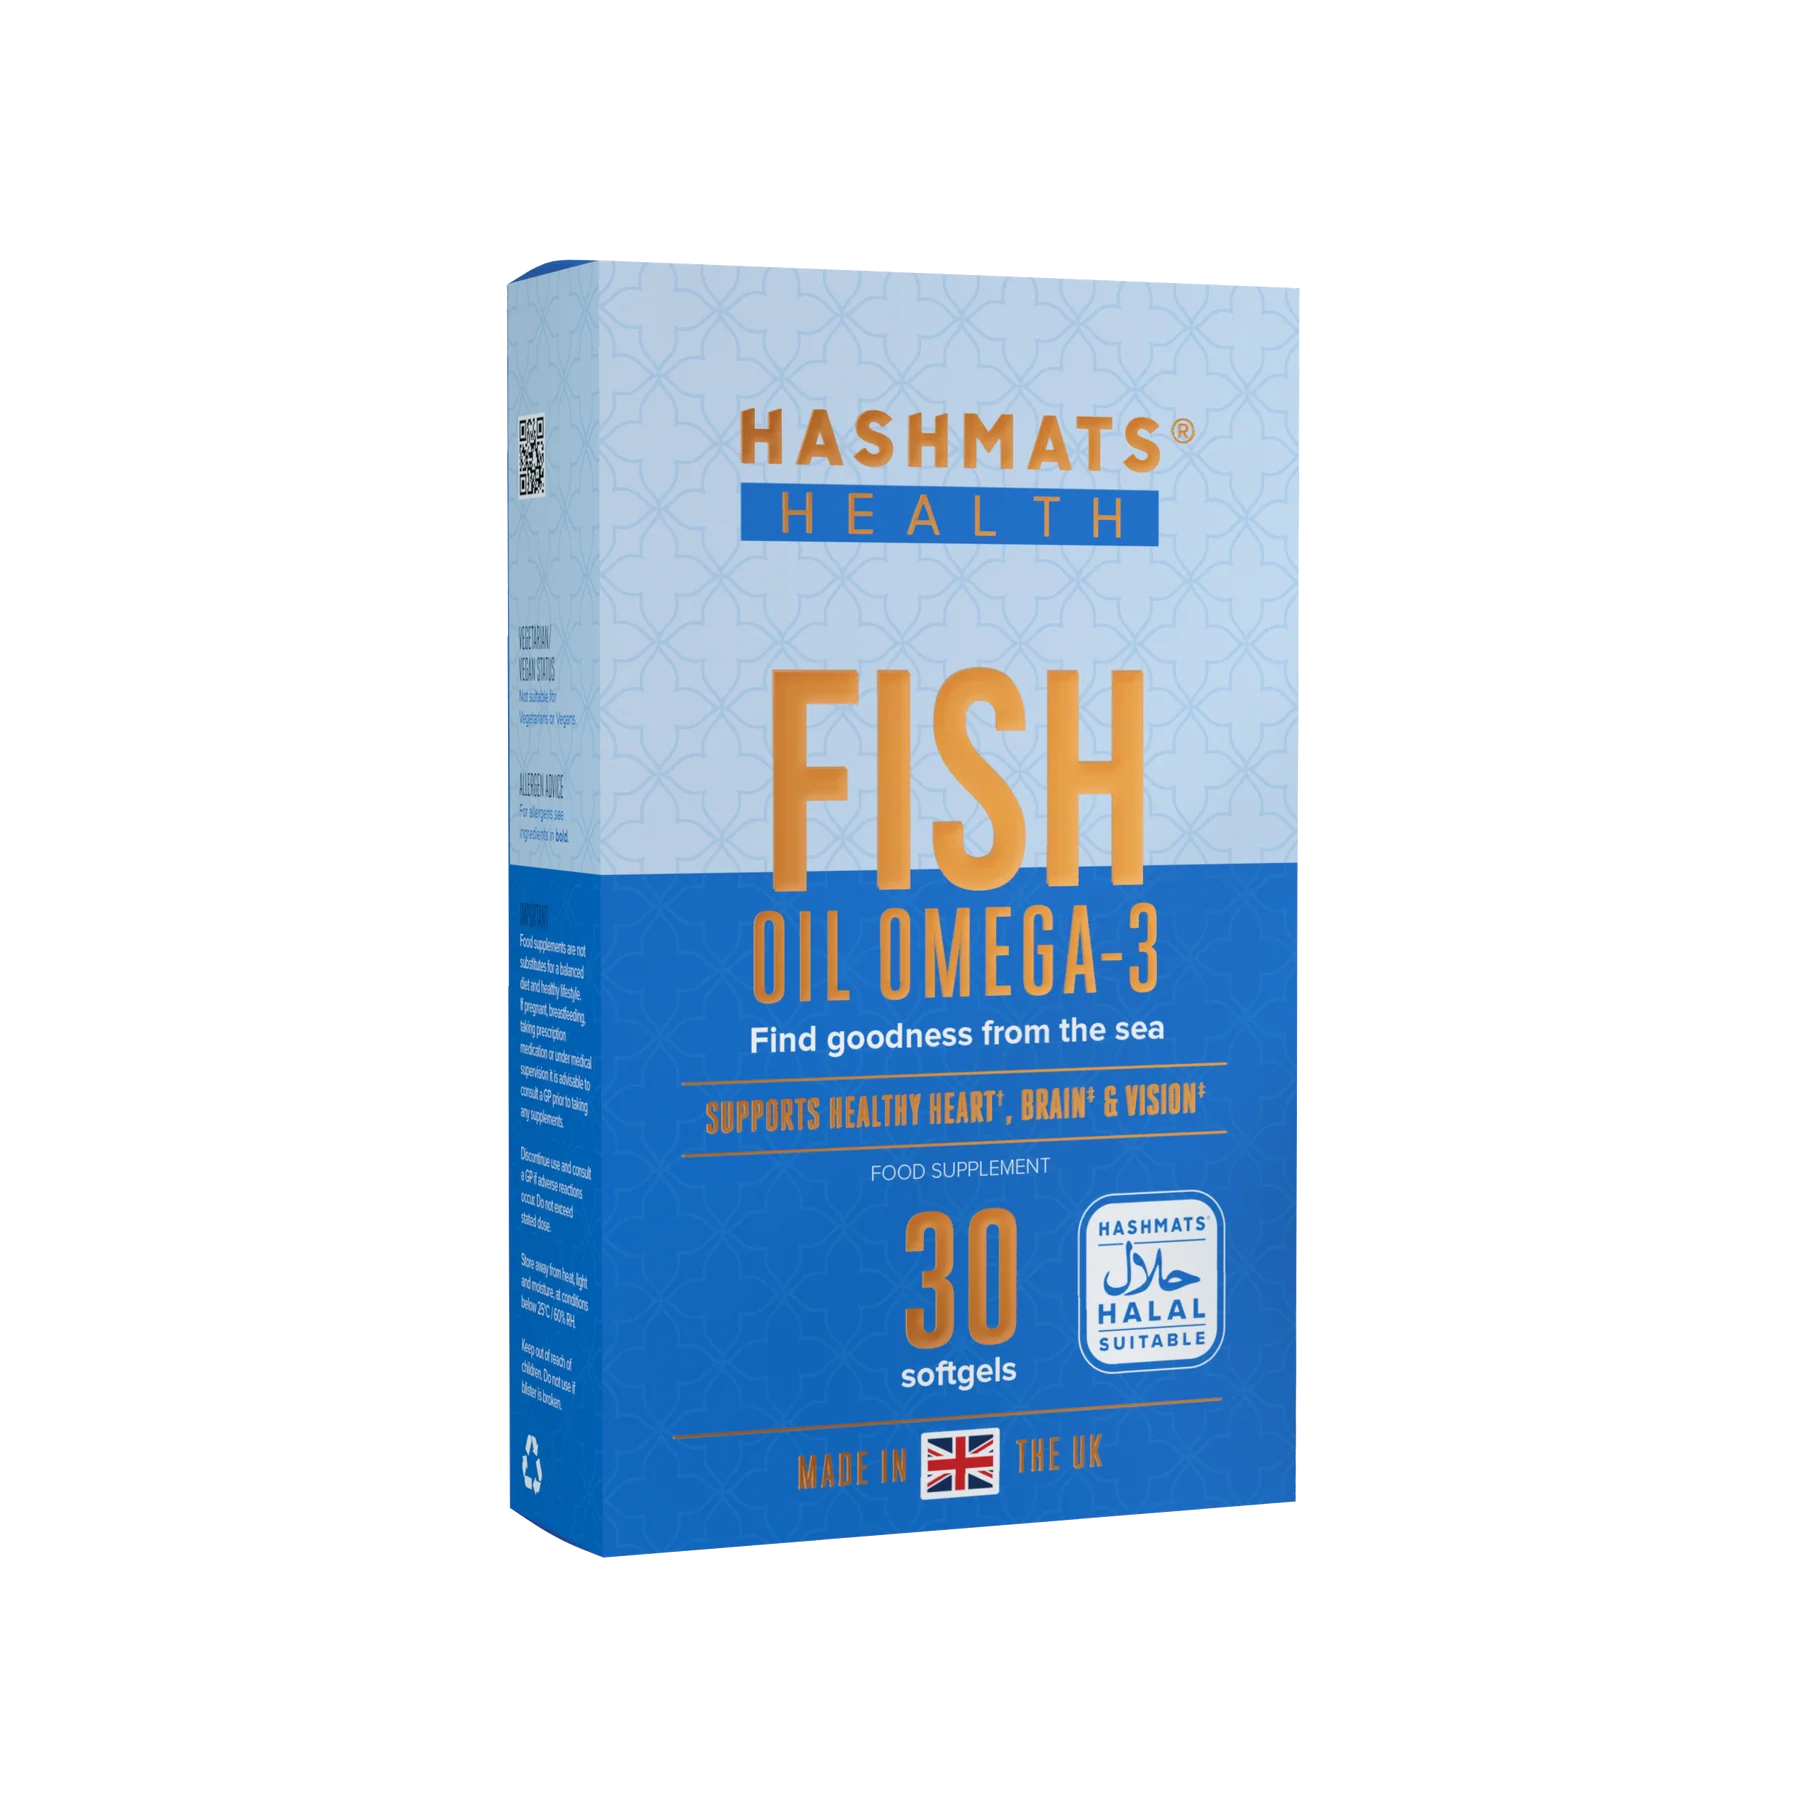 HASHMATS Health Omega 3 Fish Oil